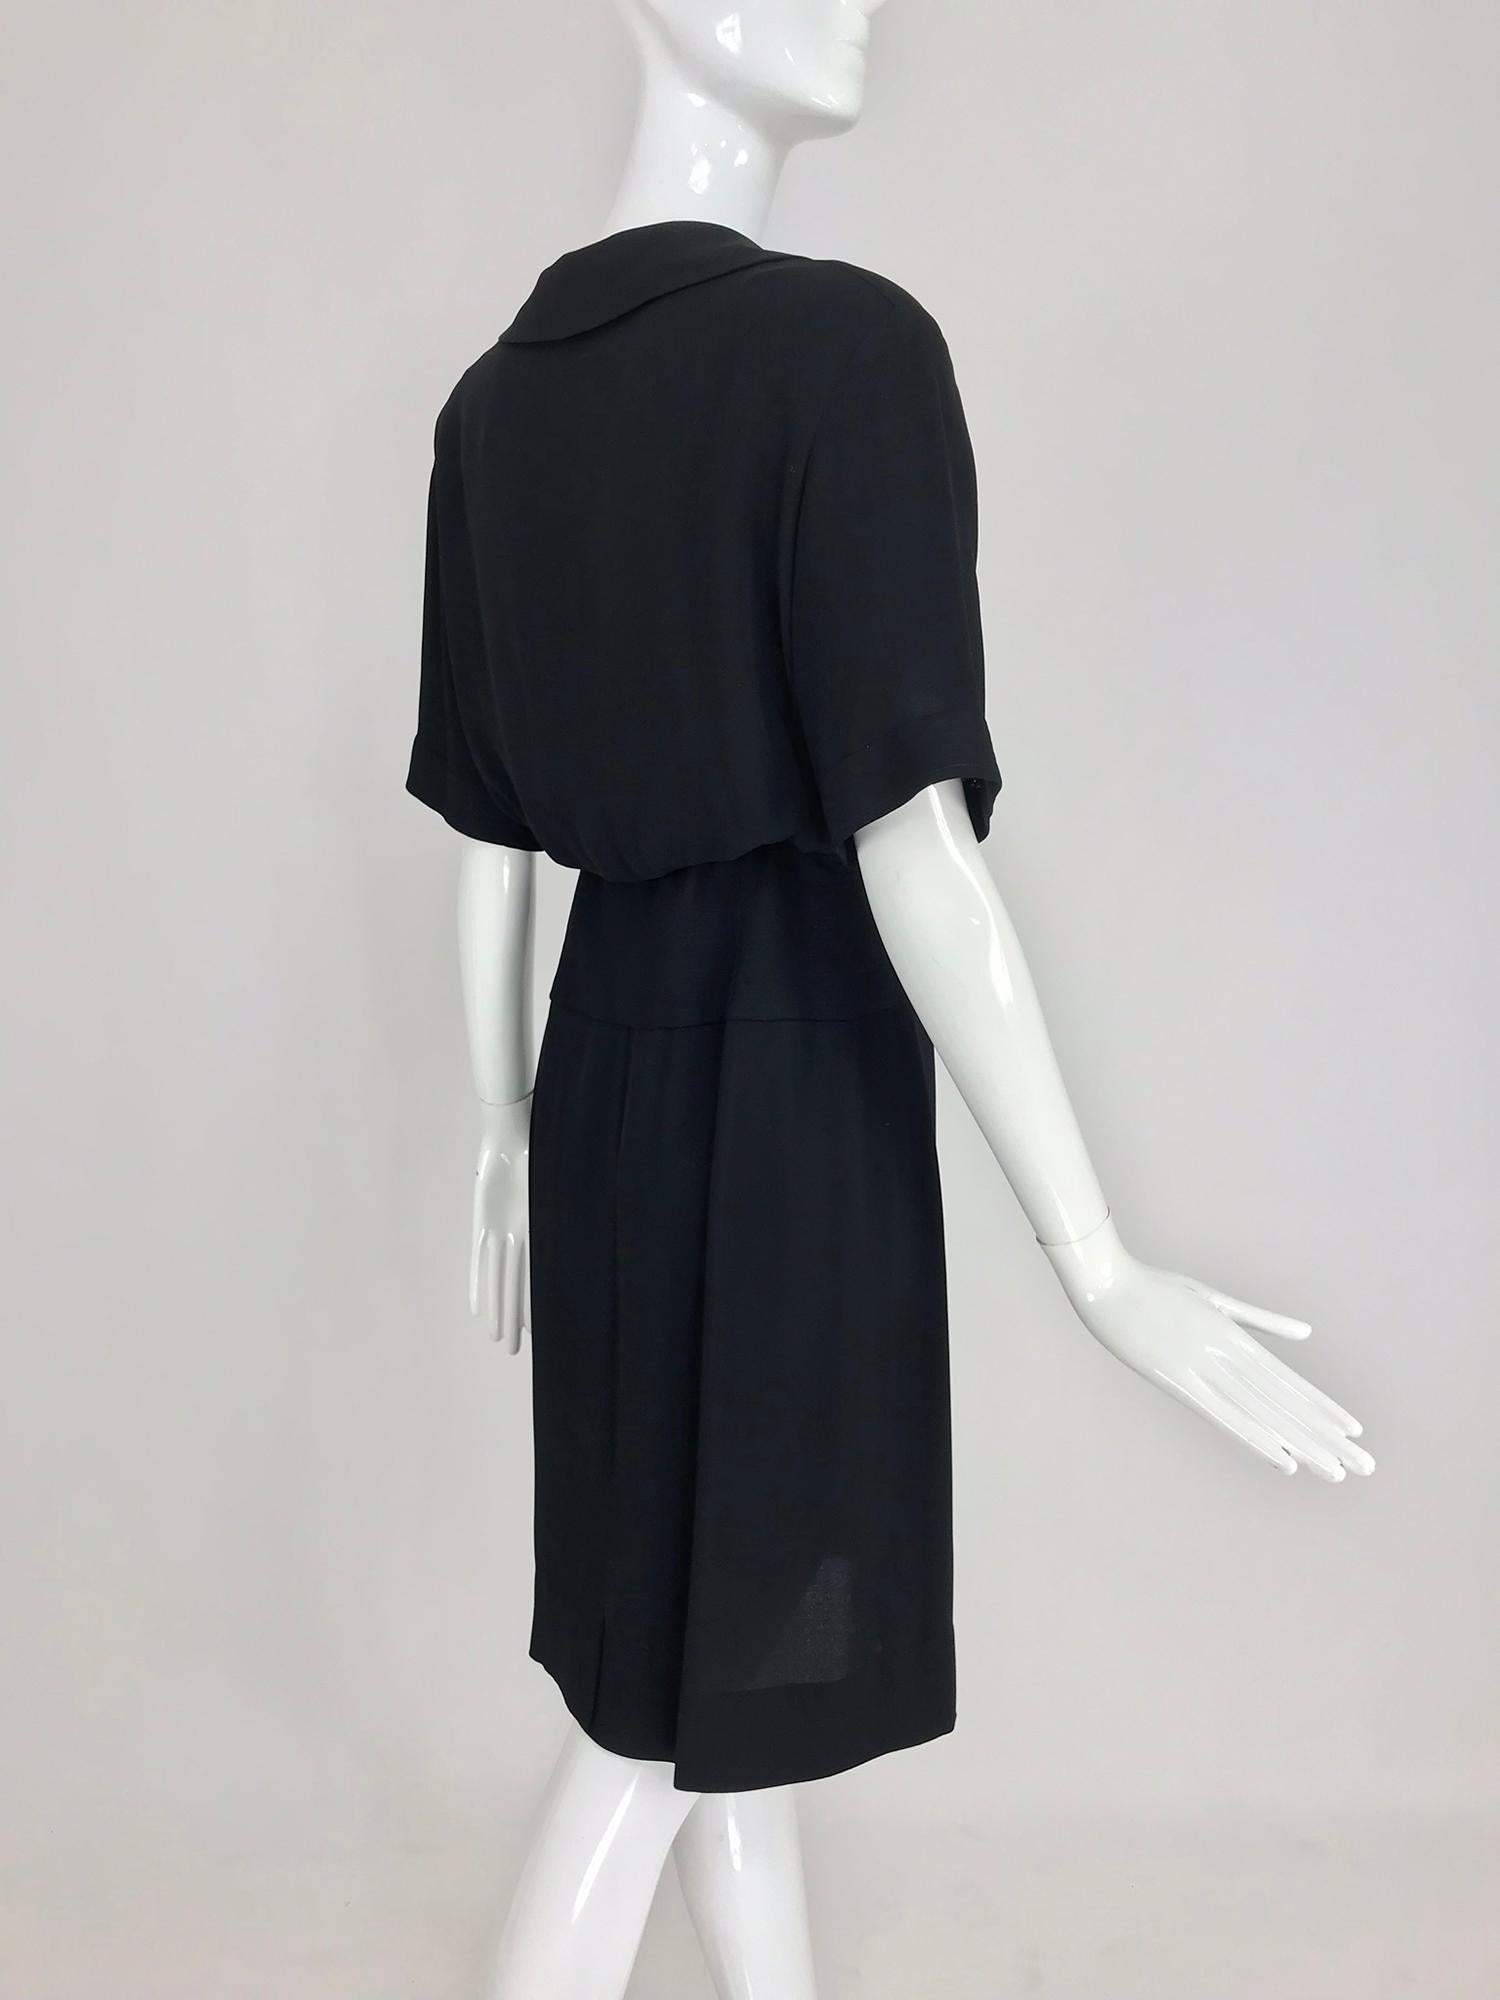 Chanel vintage black crepe shirtwaist day dress 1